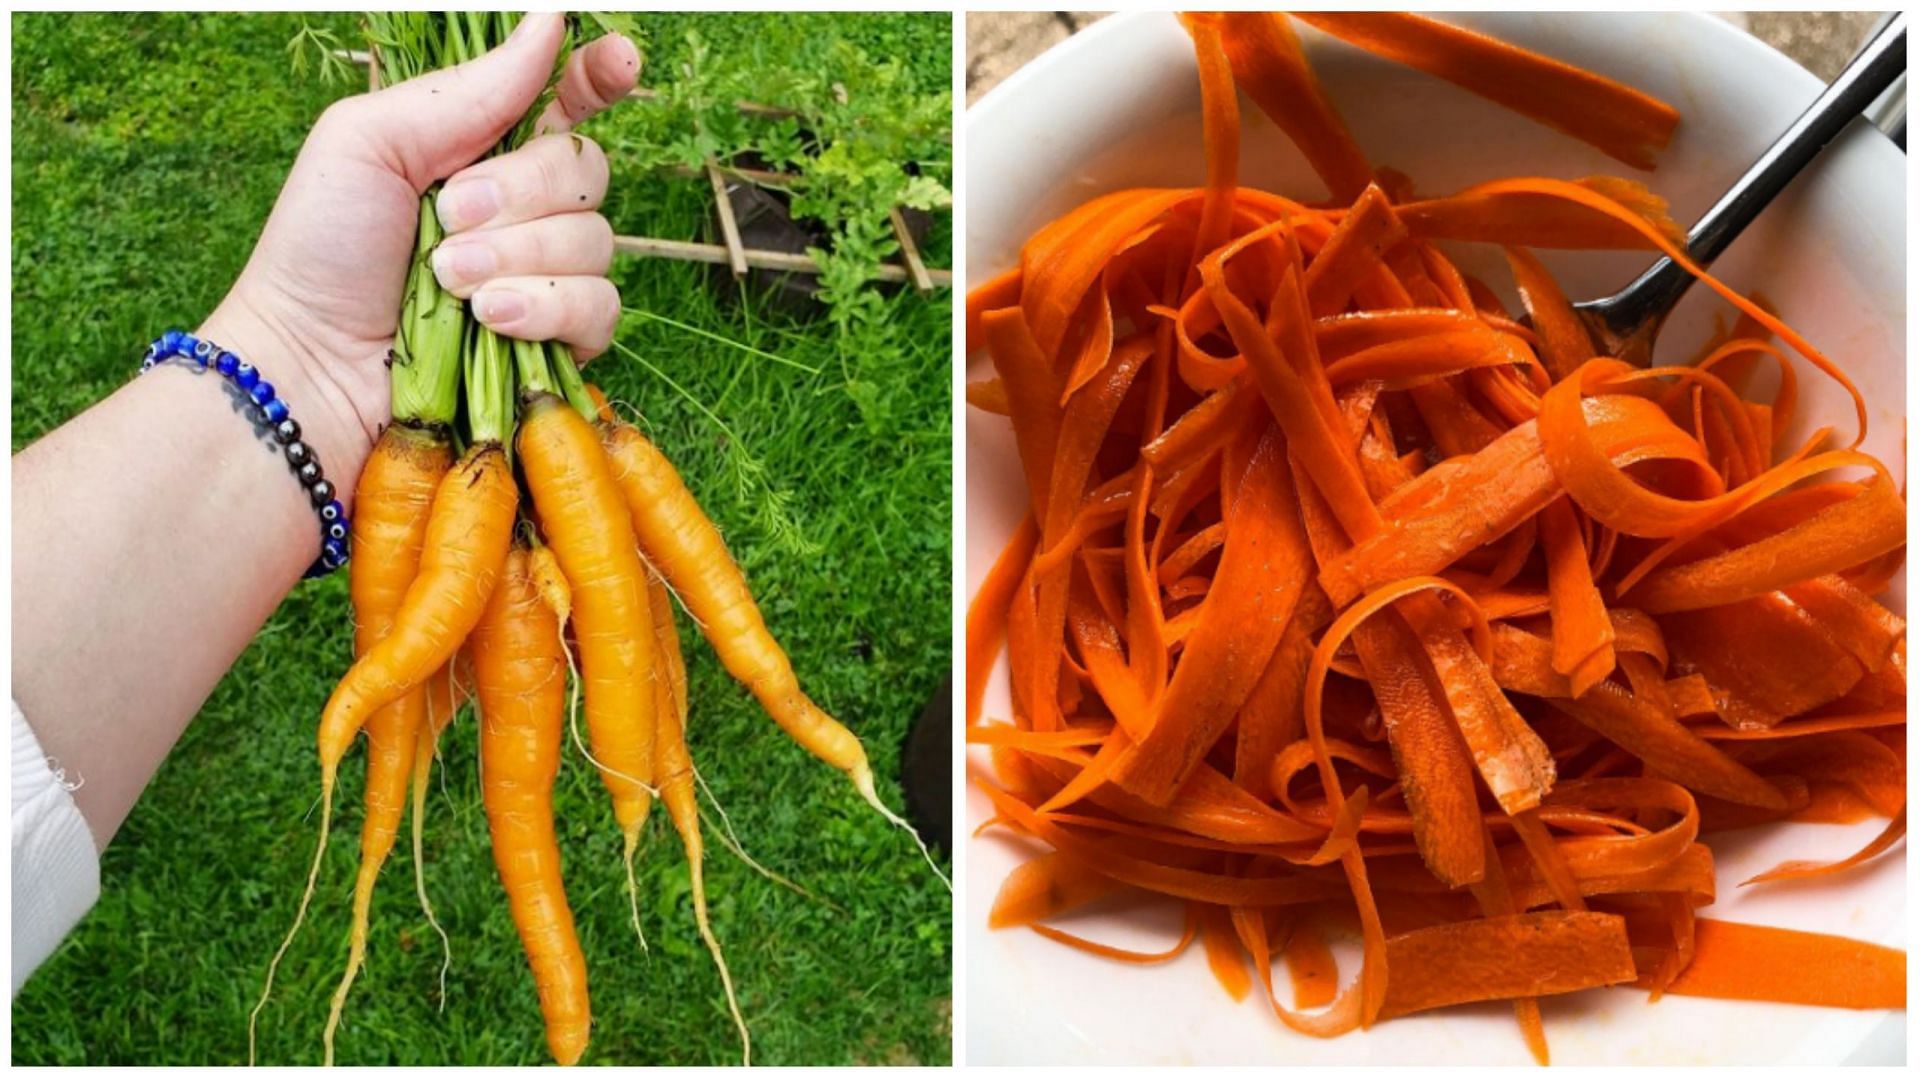 Raw carrot salad is going viral on TikTok (Image via @backto.balance and @mom.mindful/Instagram)